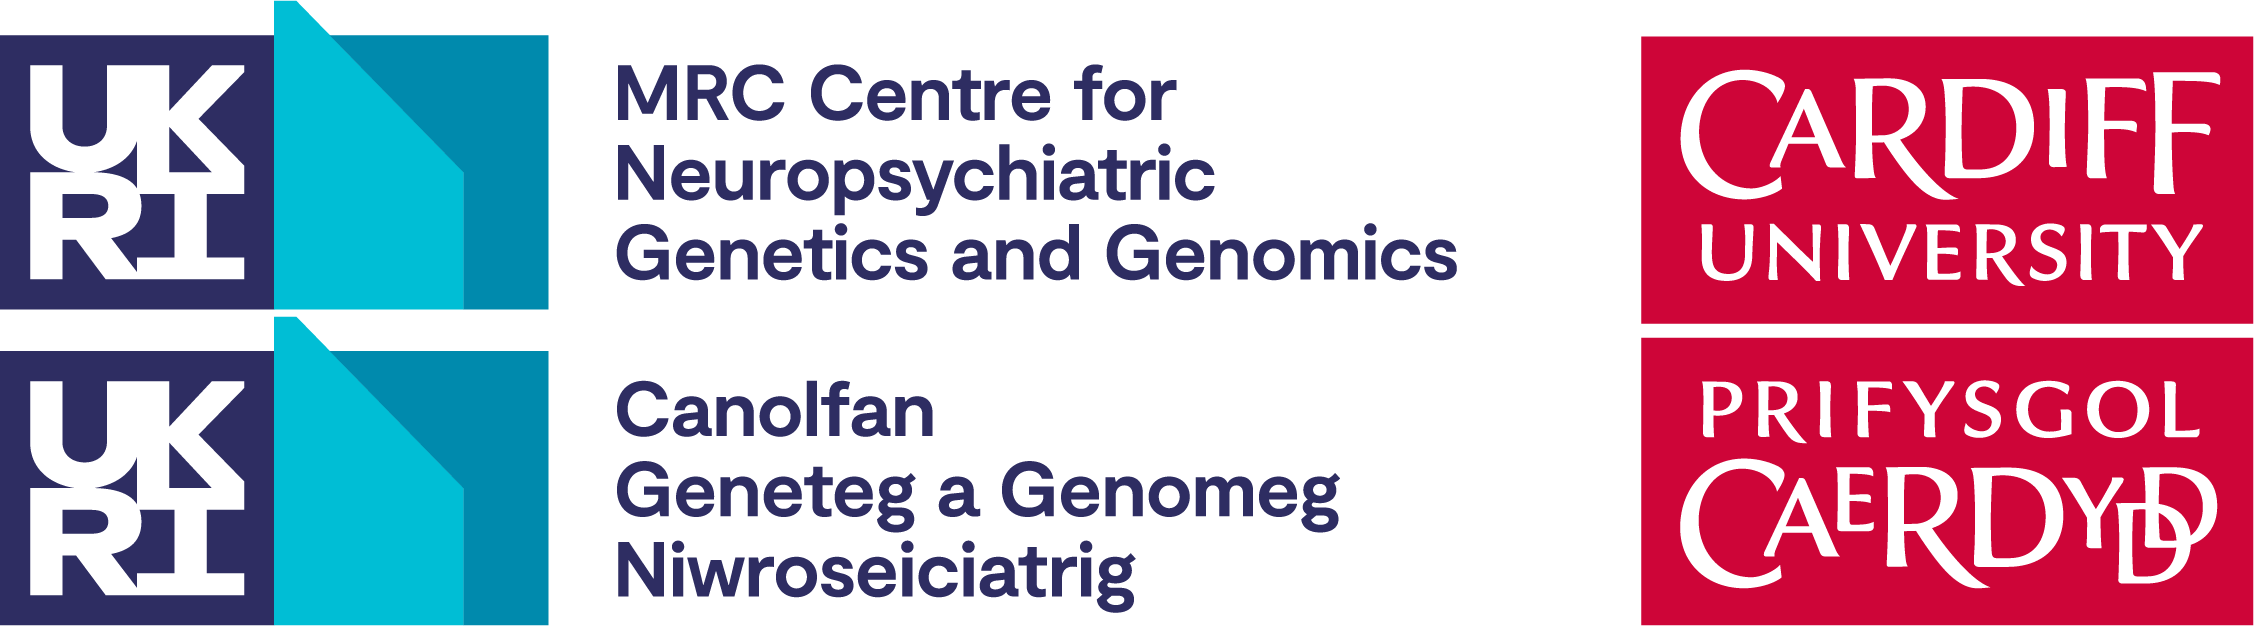 MRC Centre for Neuropsychiatric Genetics and Genomics logo